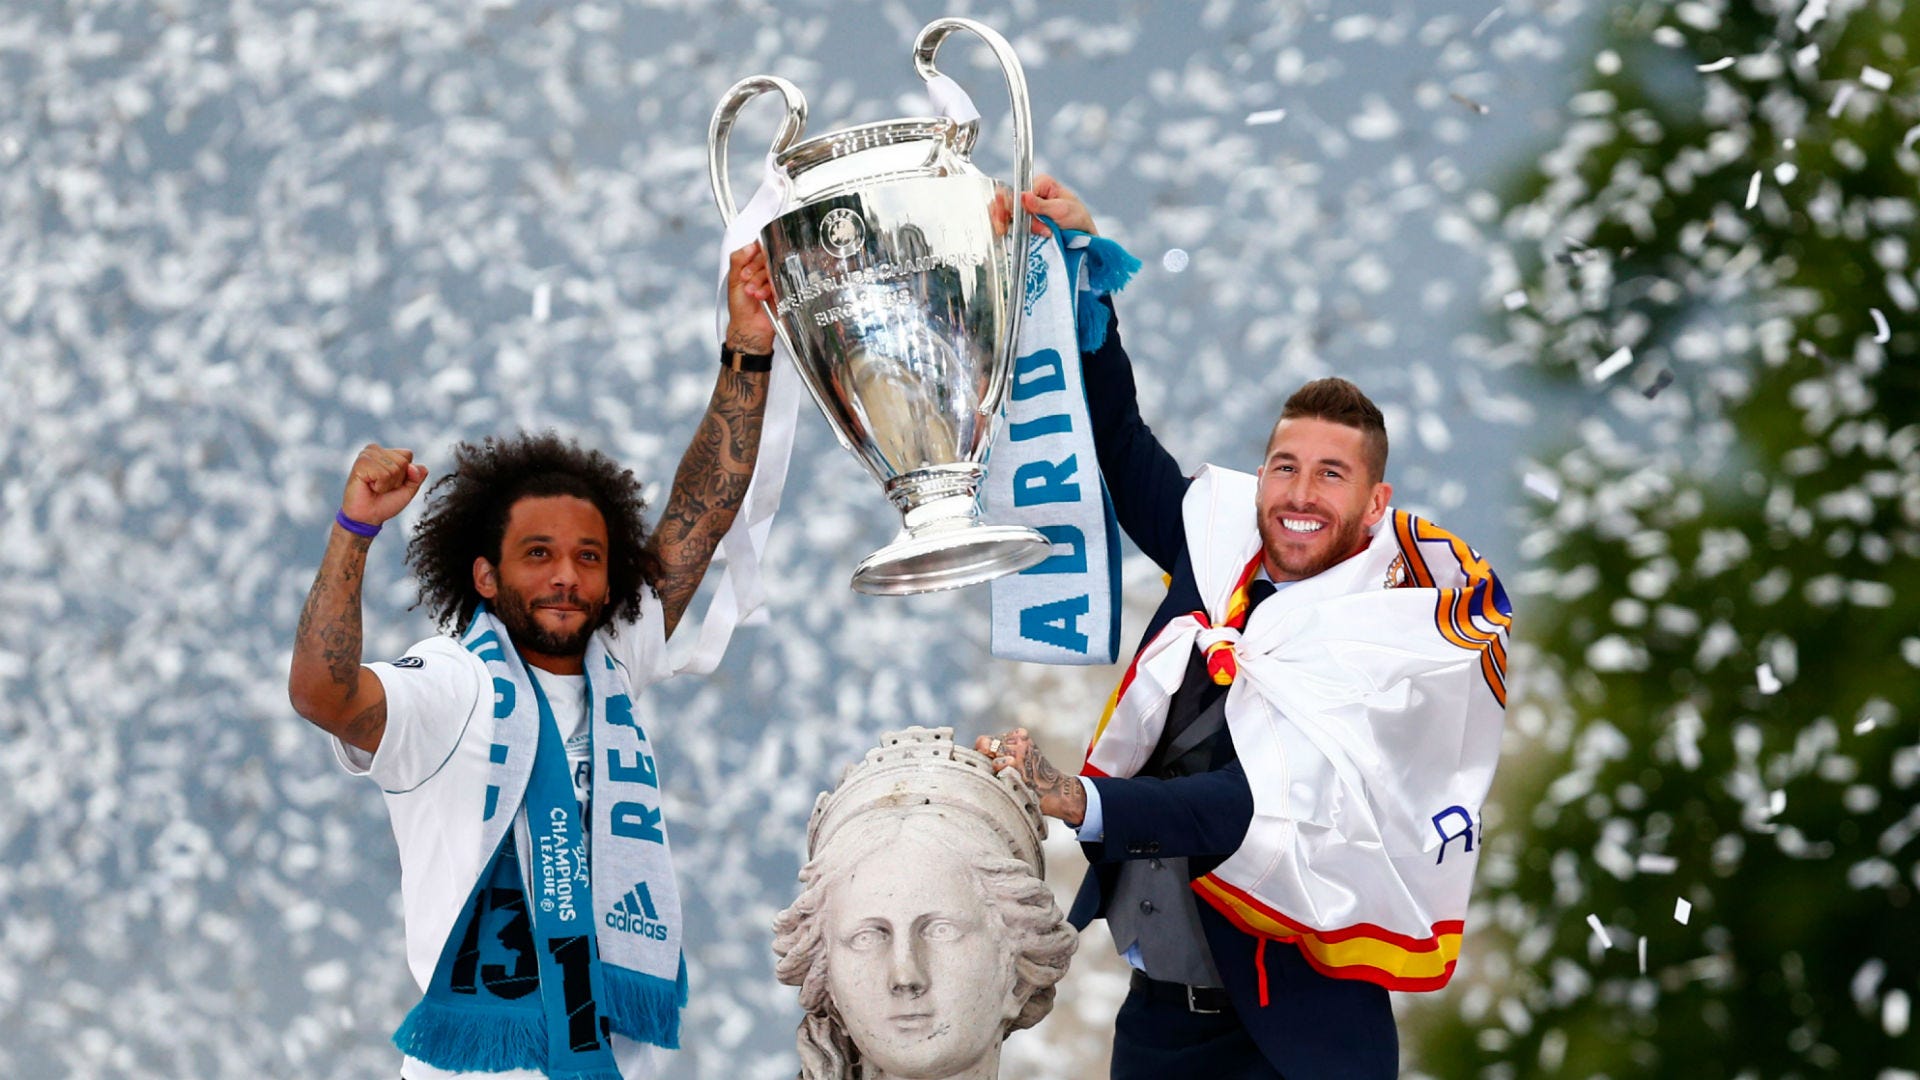 Madrid Zone on X: The Champions League winners list.🏆   / X